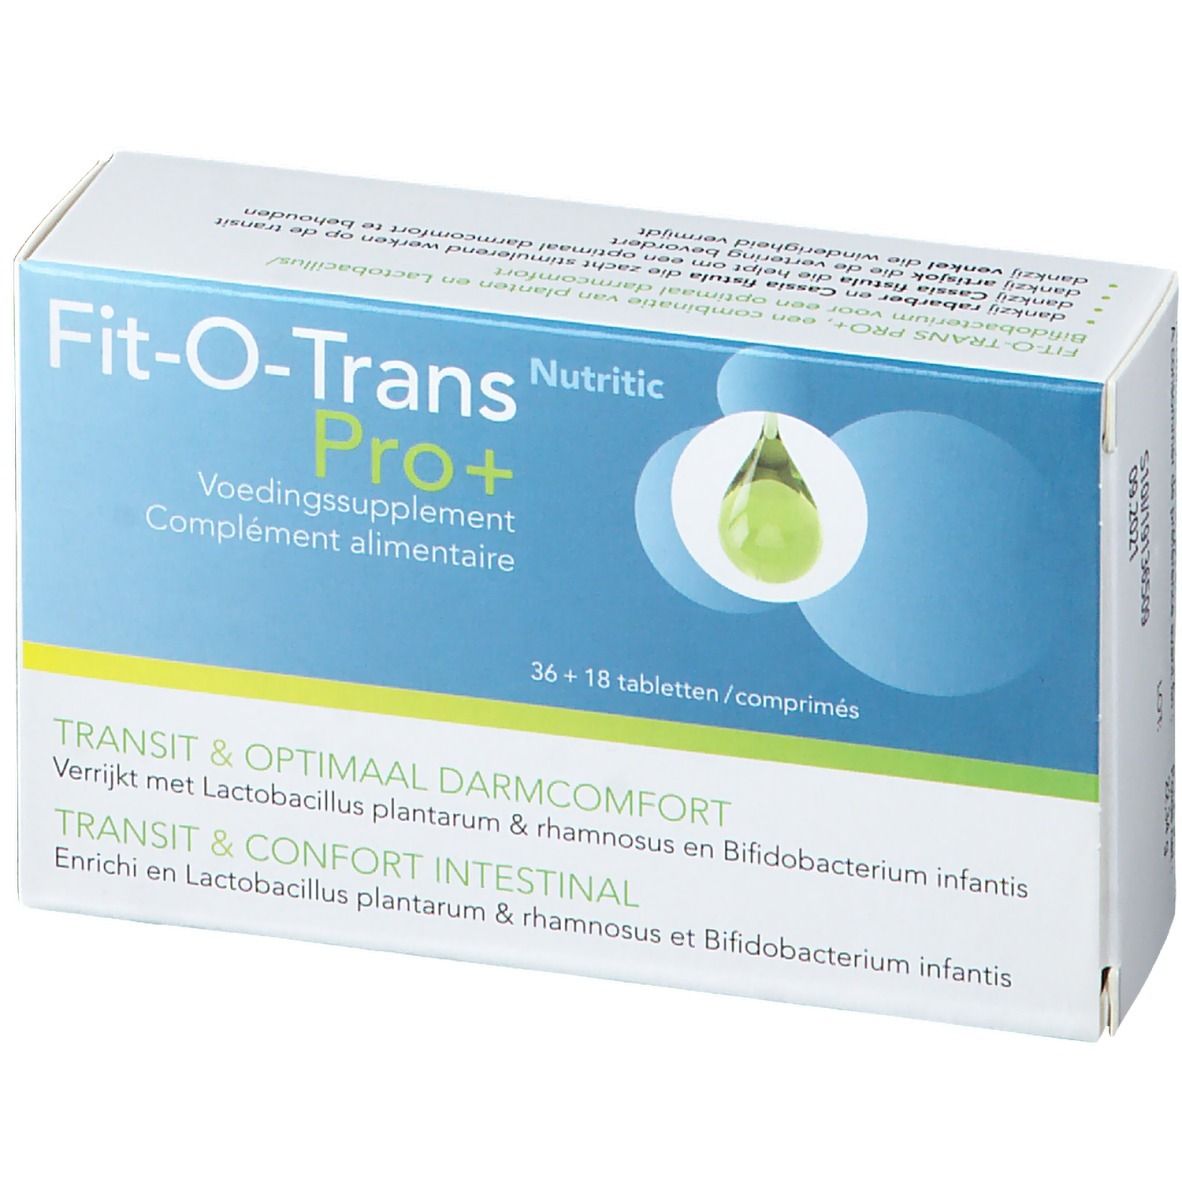 Fit-O-Trans Pro+